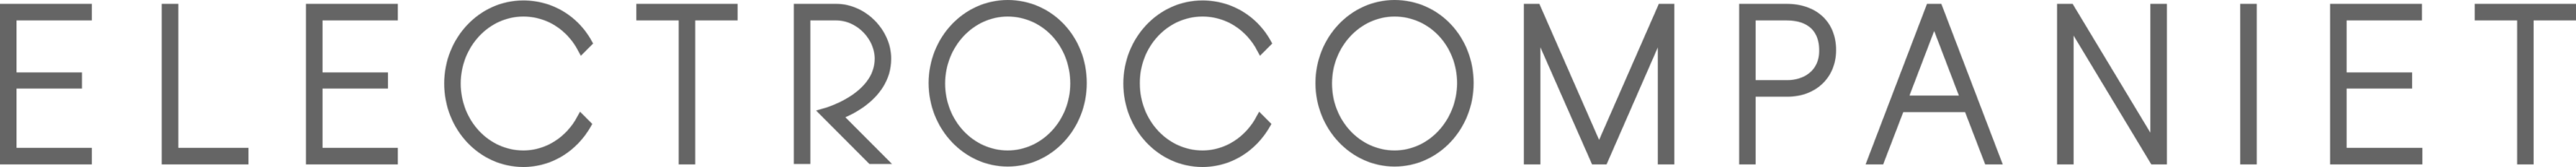 Electrocompaniet Logo